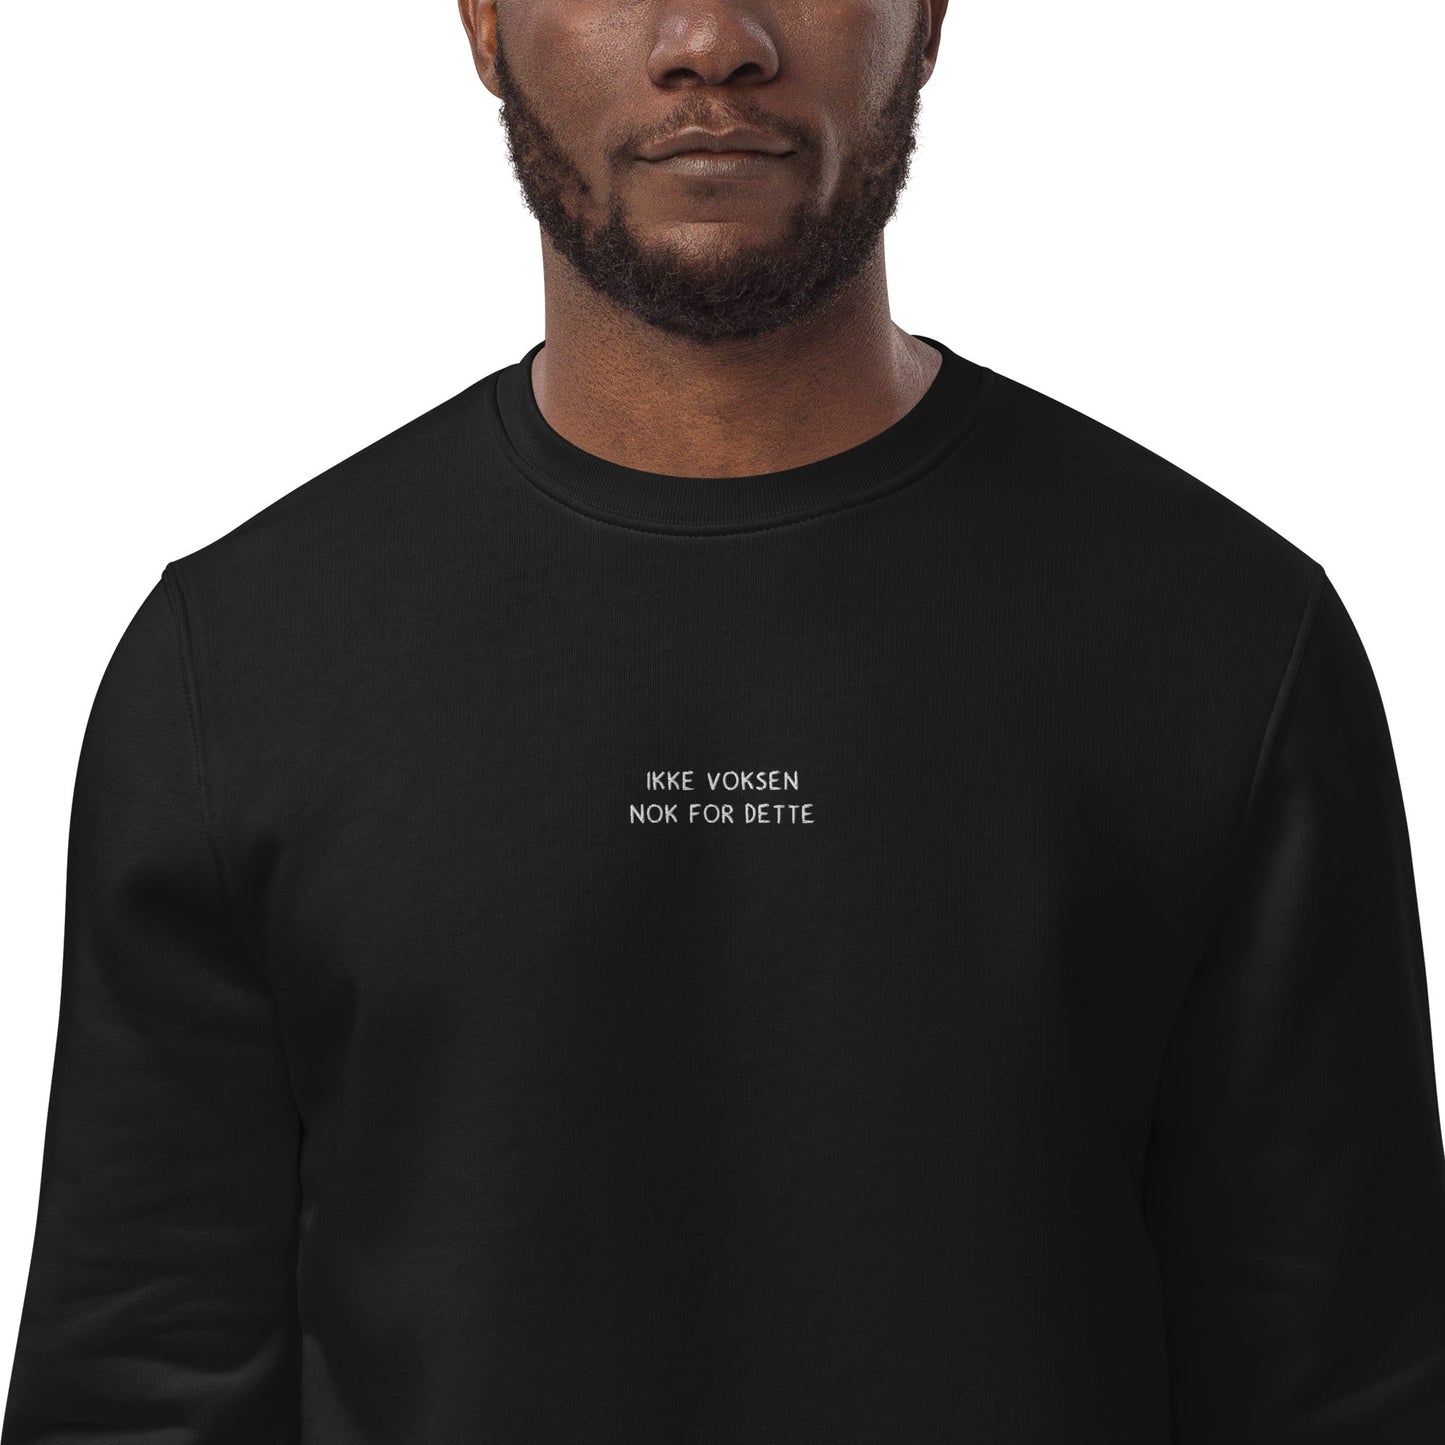 VAGPWR Black / S Ike voksen - Unisex eco sweatshirt